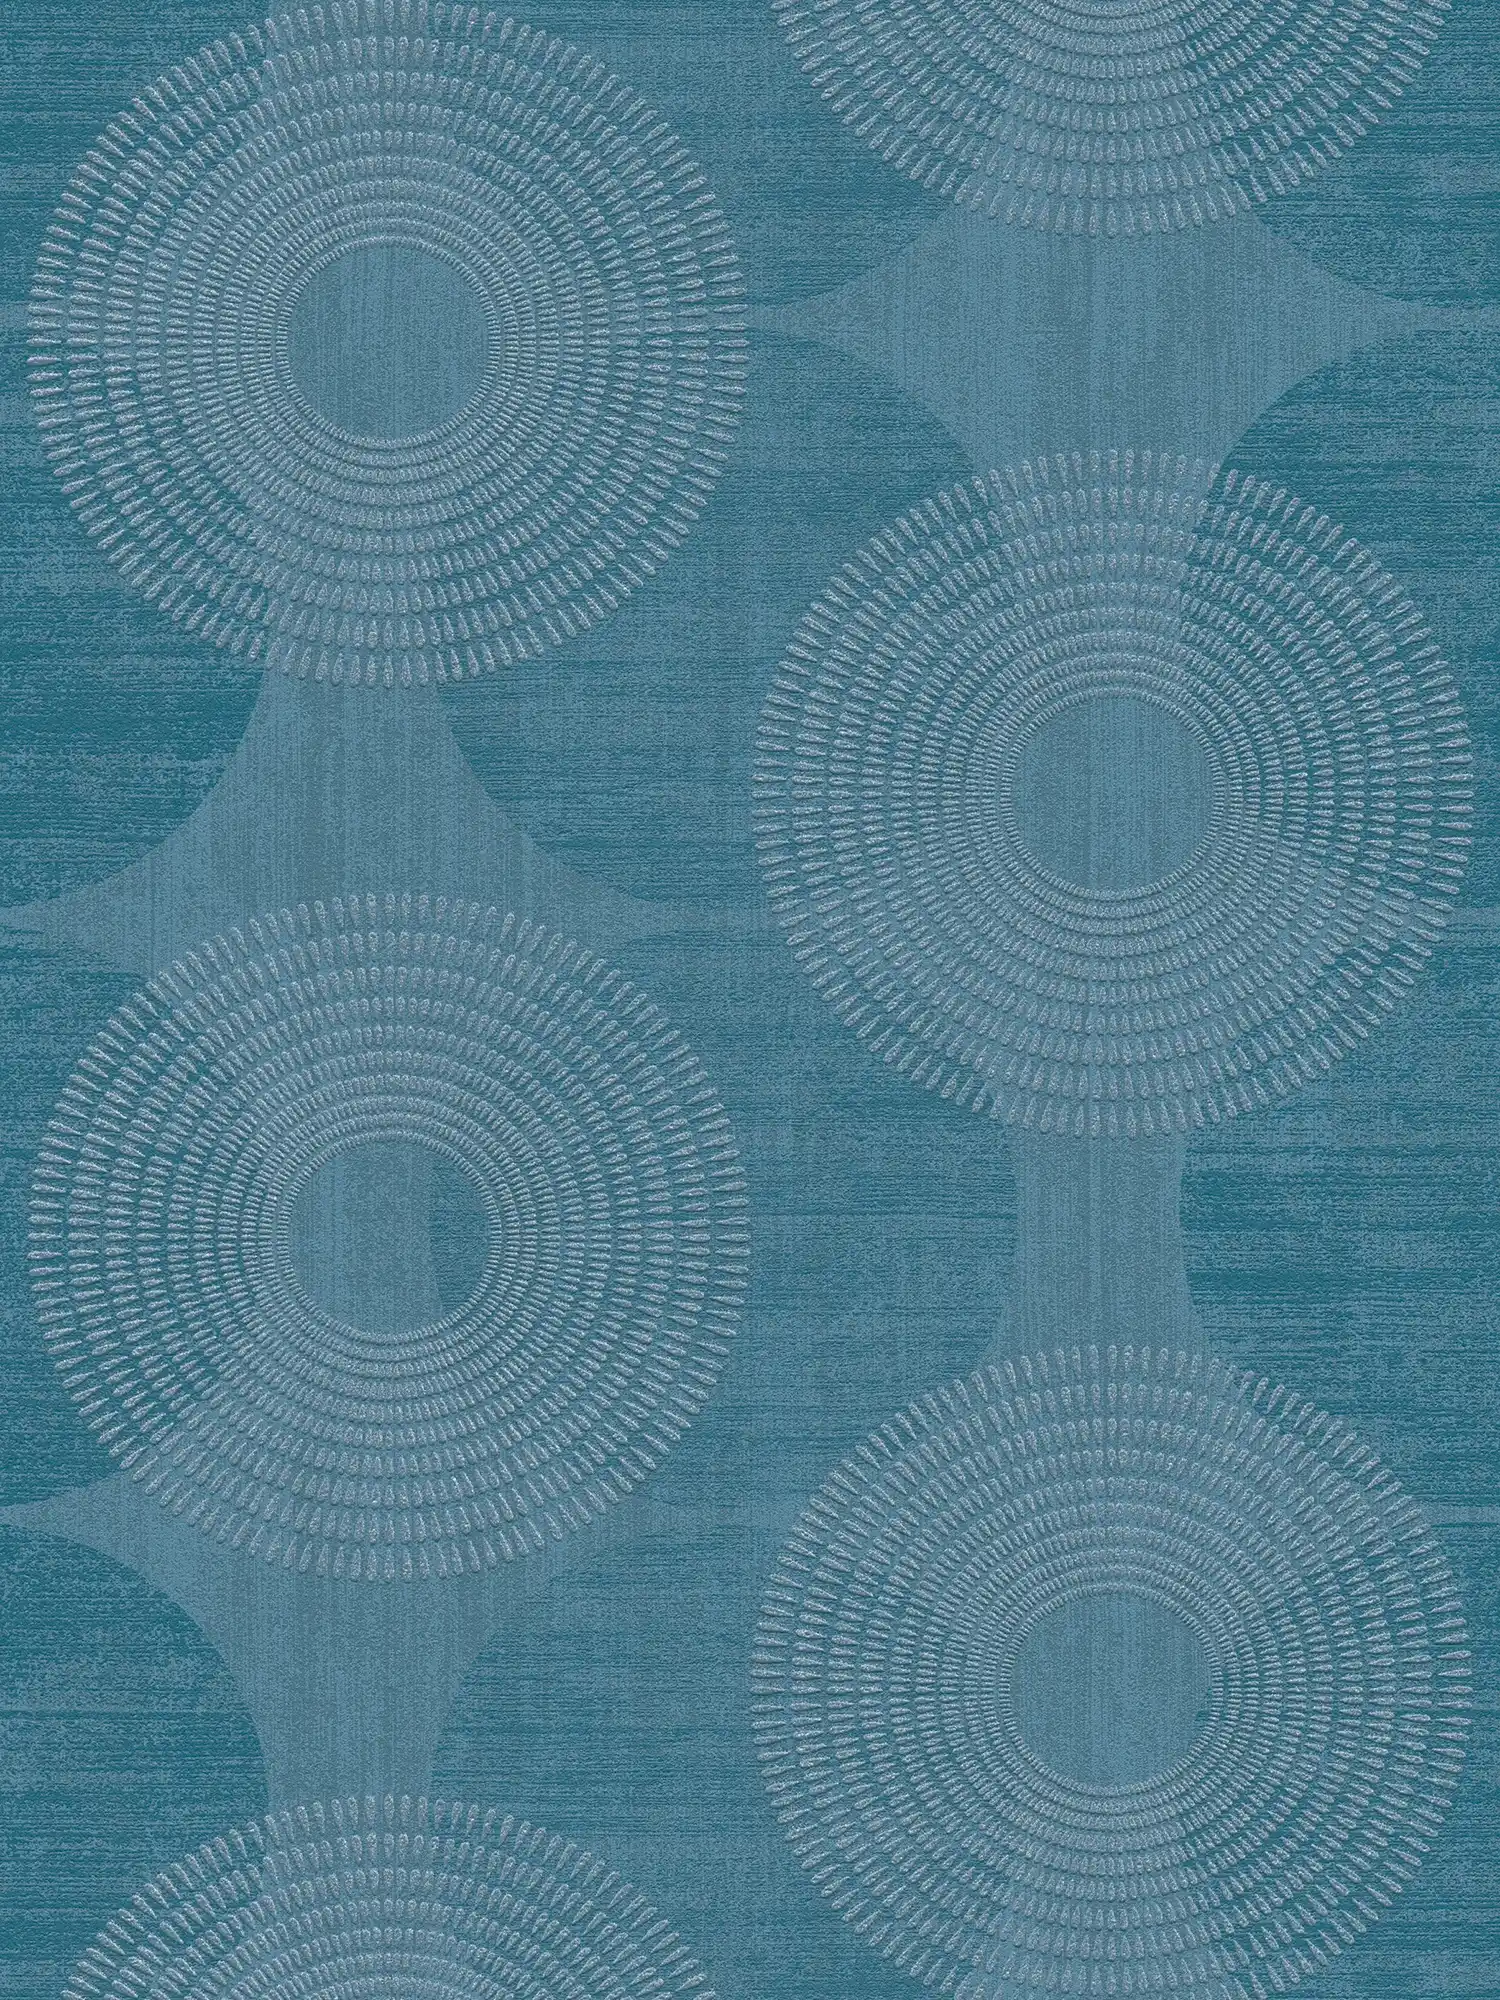 Effectbehang geometrisch Scandinavisch design - blauw
